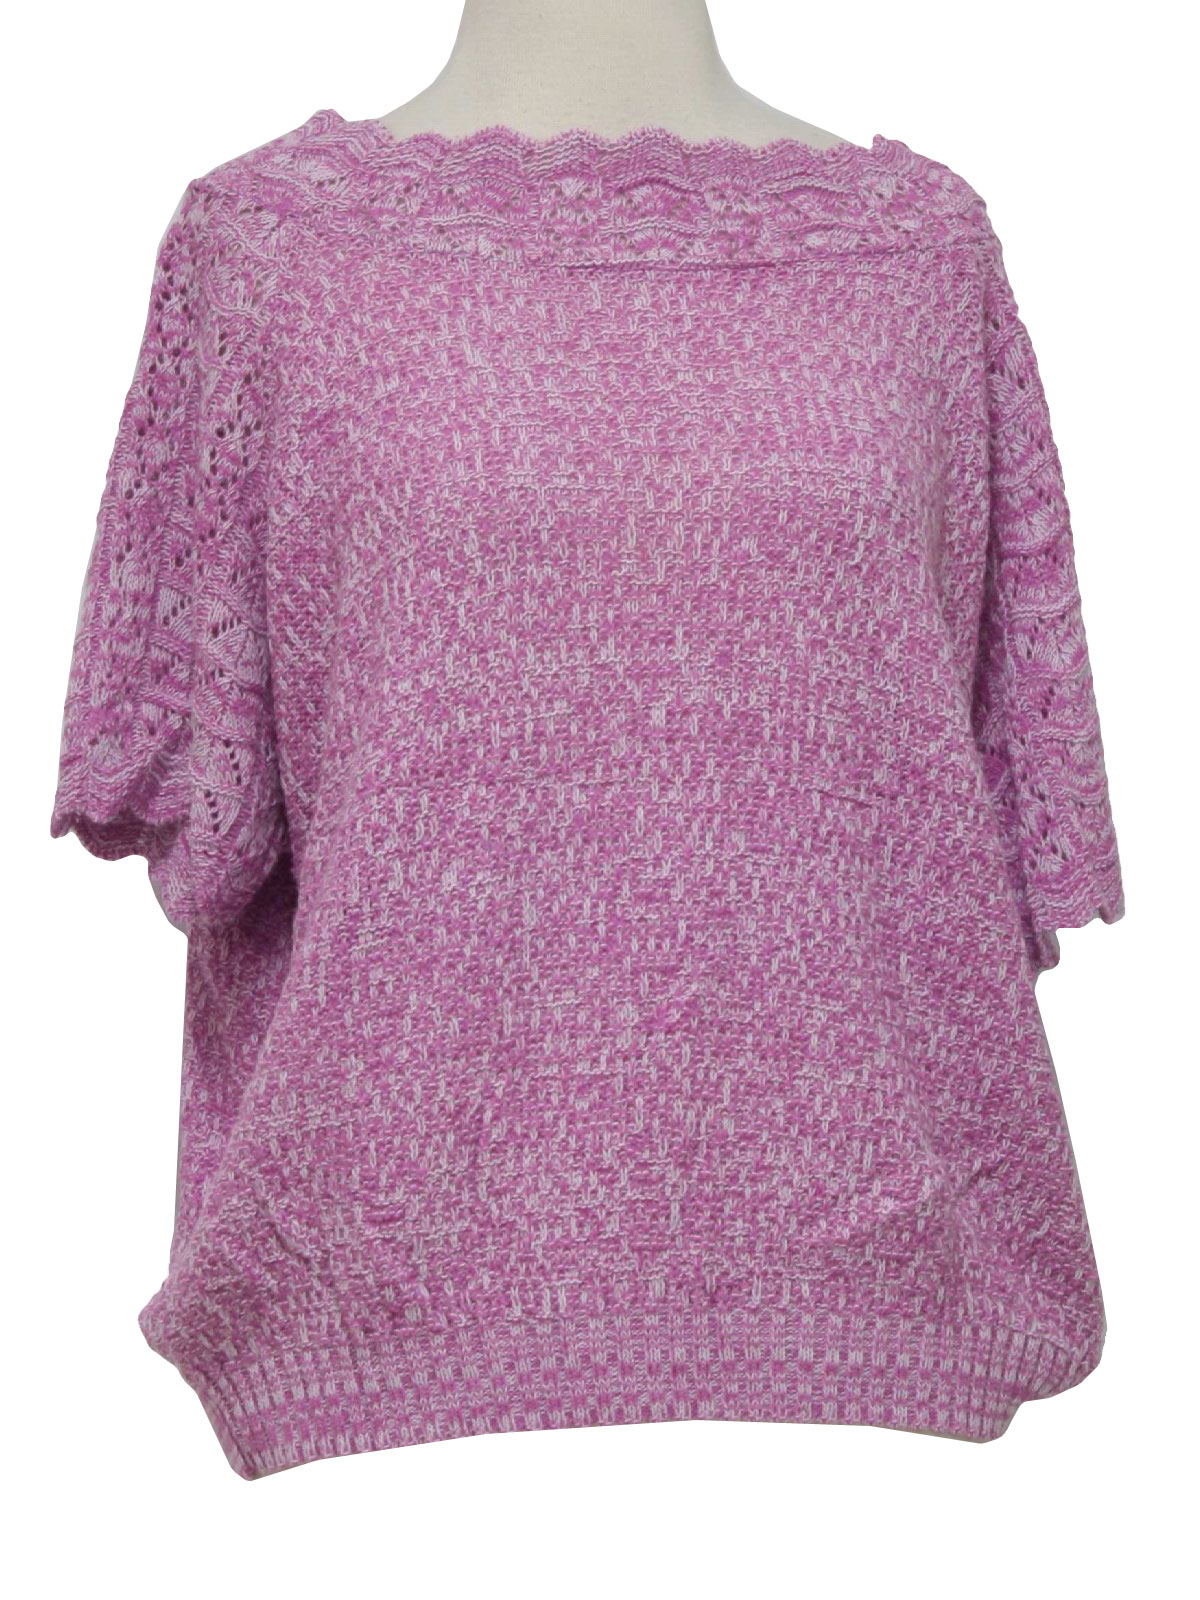 80's Haband Sweater: 80s -Haband- Womens purple and white heathered ...